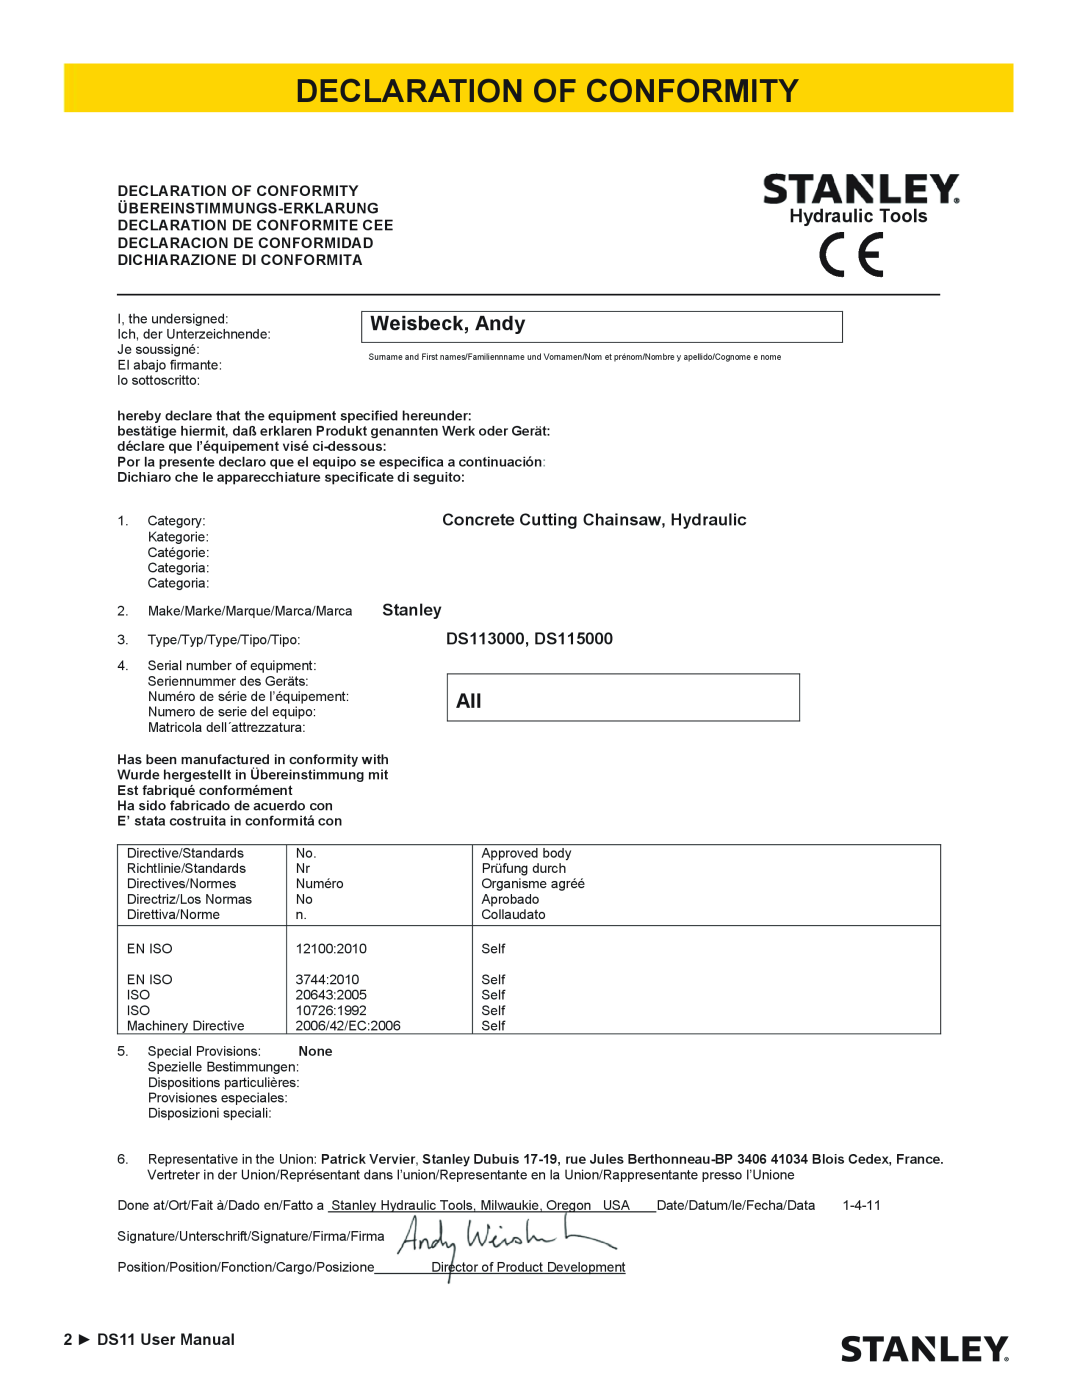 Stanley Black & Decker DS11 Declaration Of Conformity, Weisbeck, Andy, Concrete Cutting Chainsaw, Hydraulic, Stanley, None 